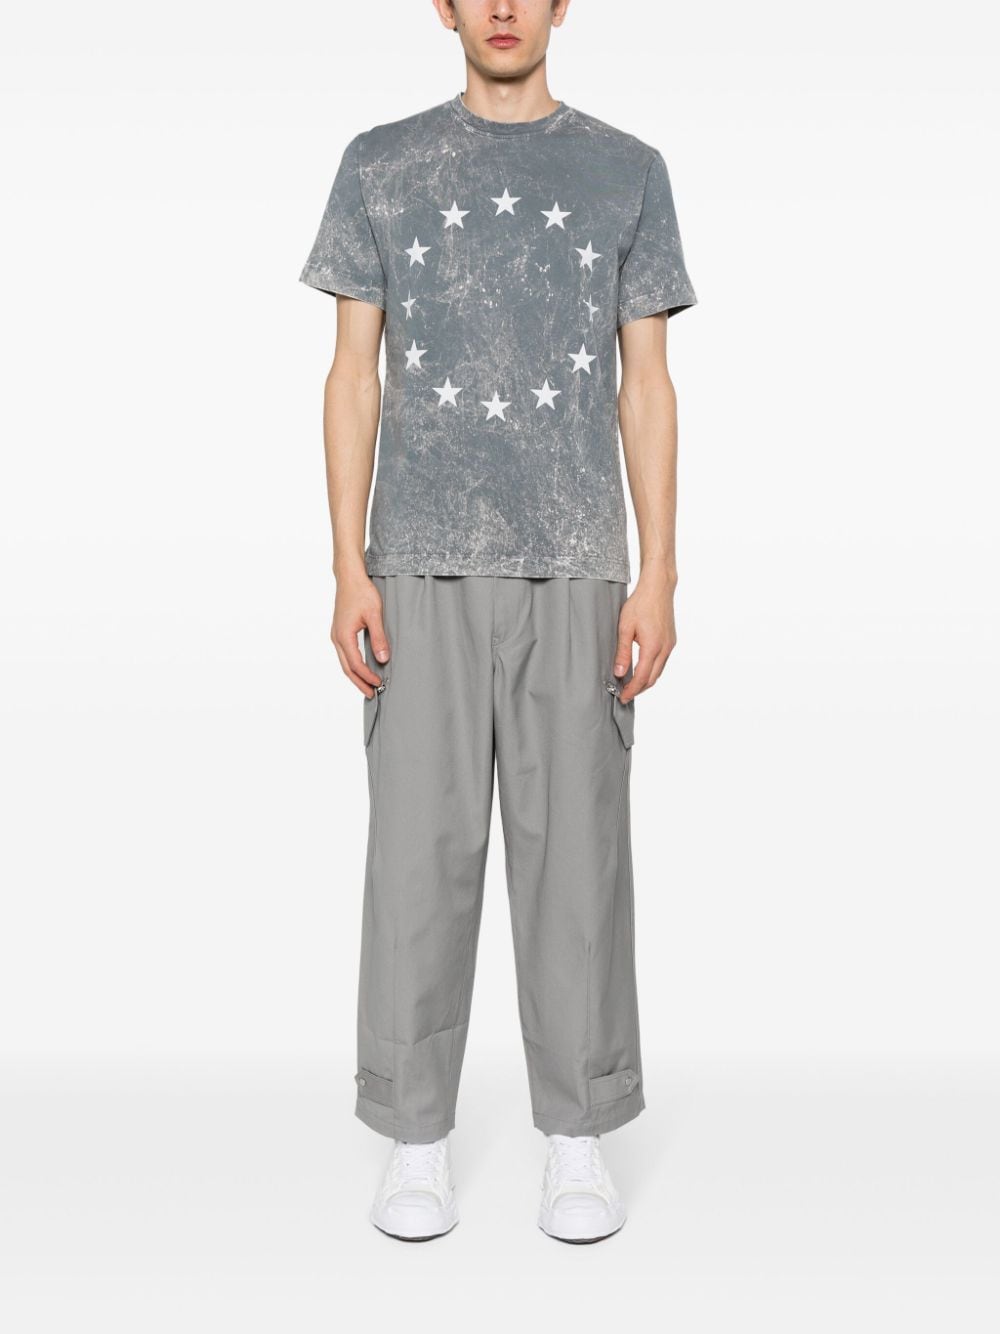 Etudes T-shirt met sterrenprint - Grijs